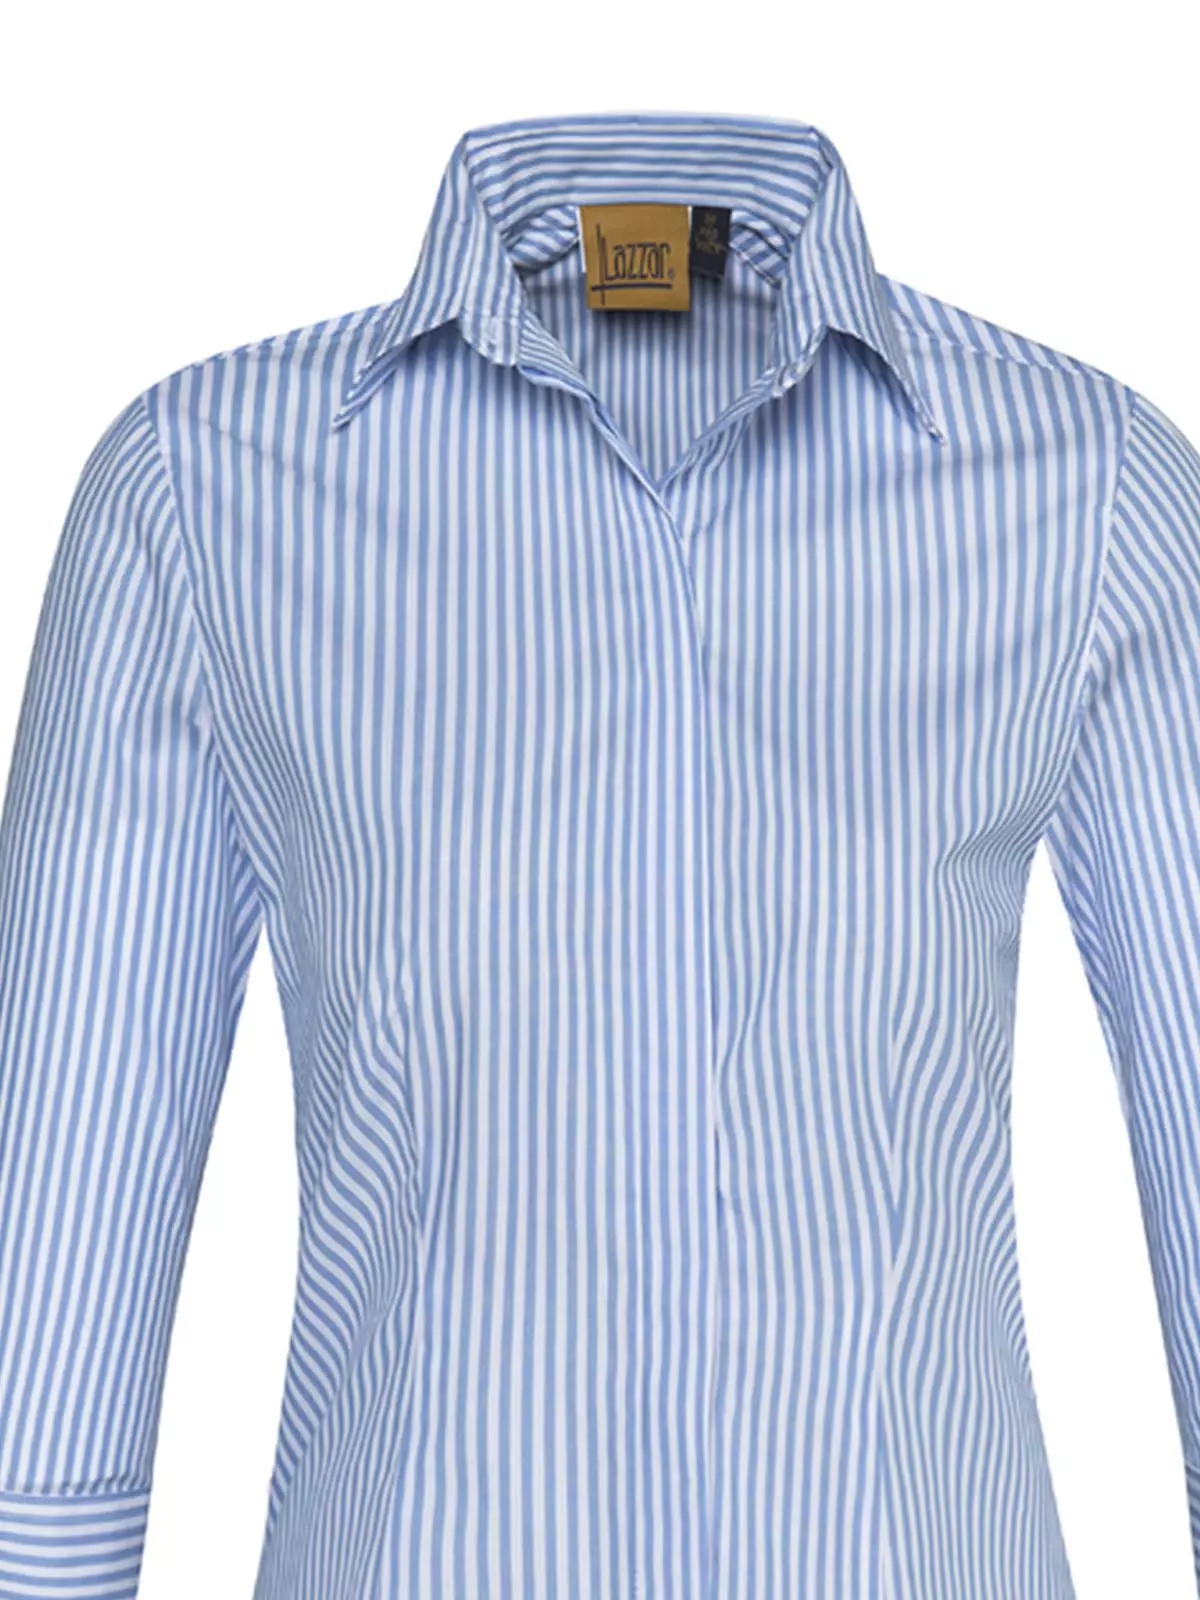 Striped blouse light blue 